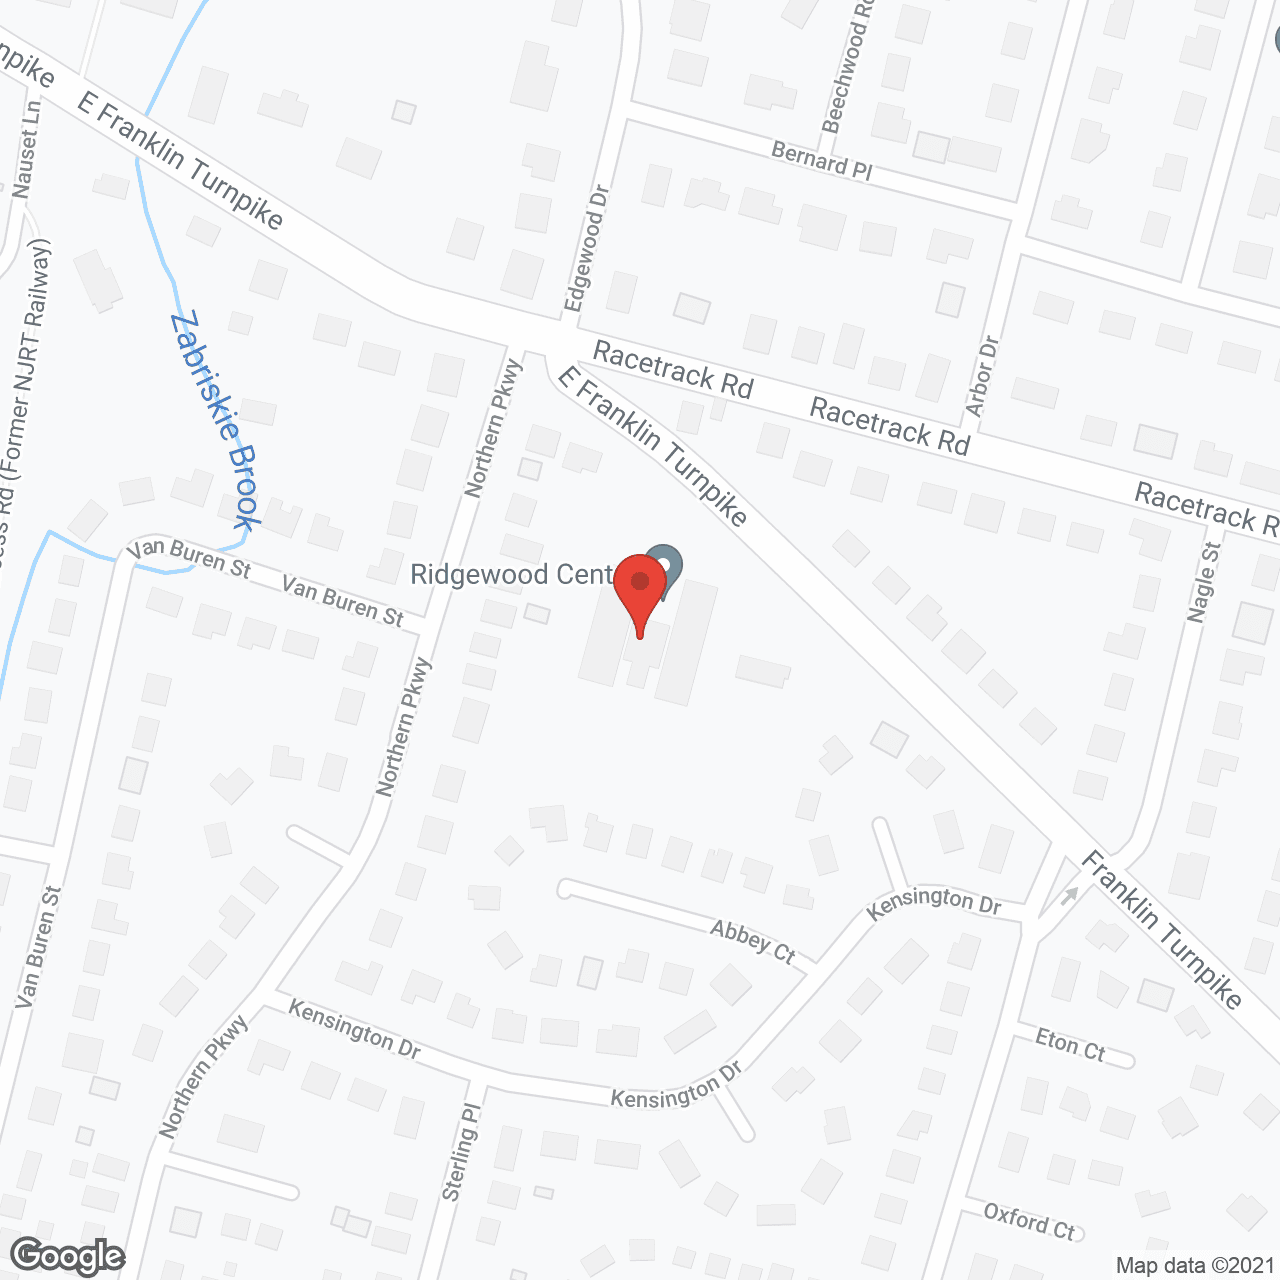 Ridgewood Center in google map